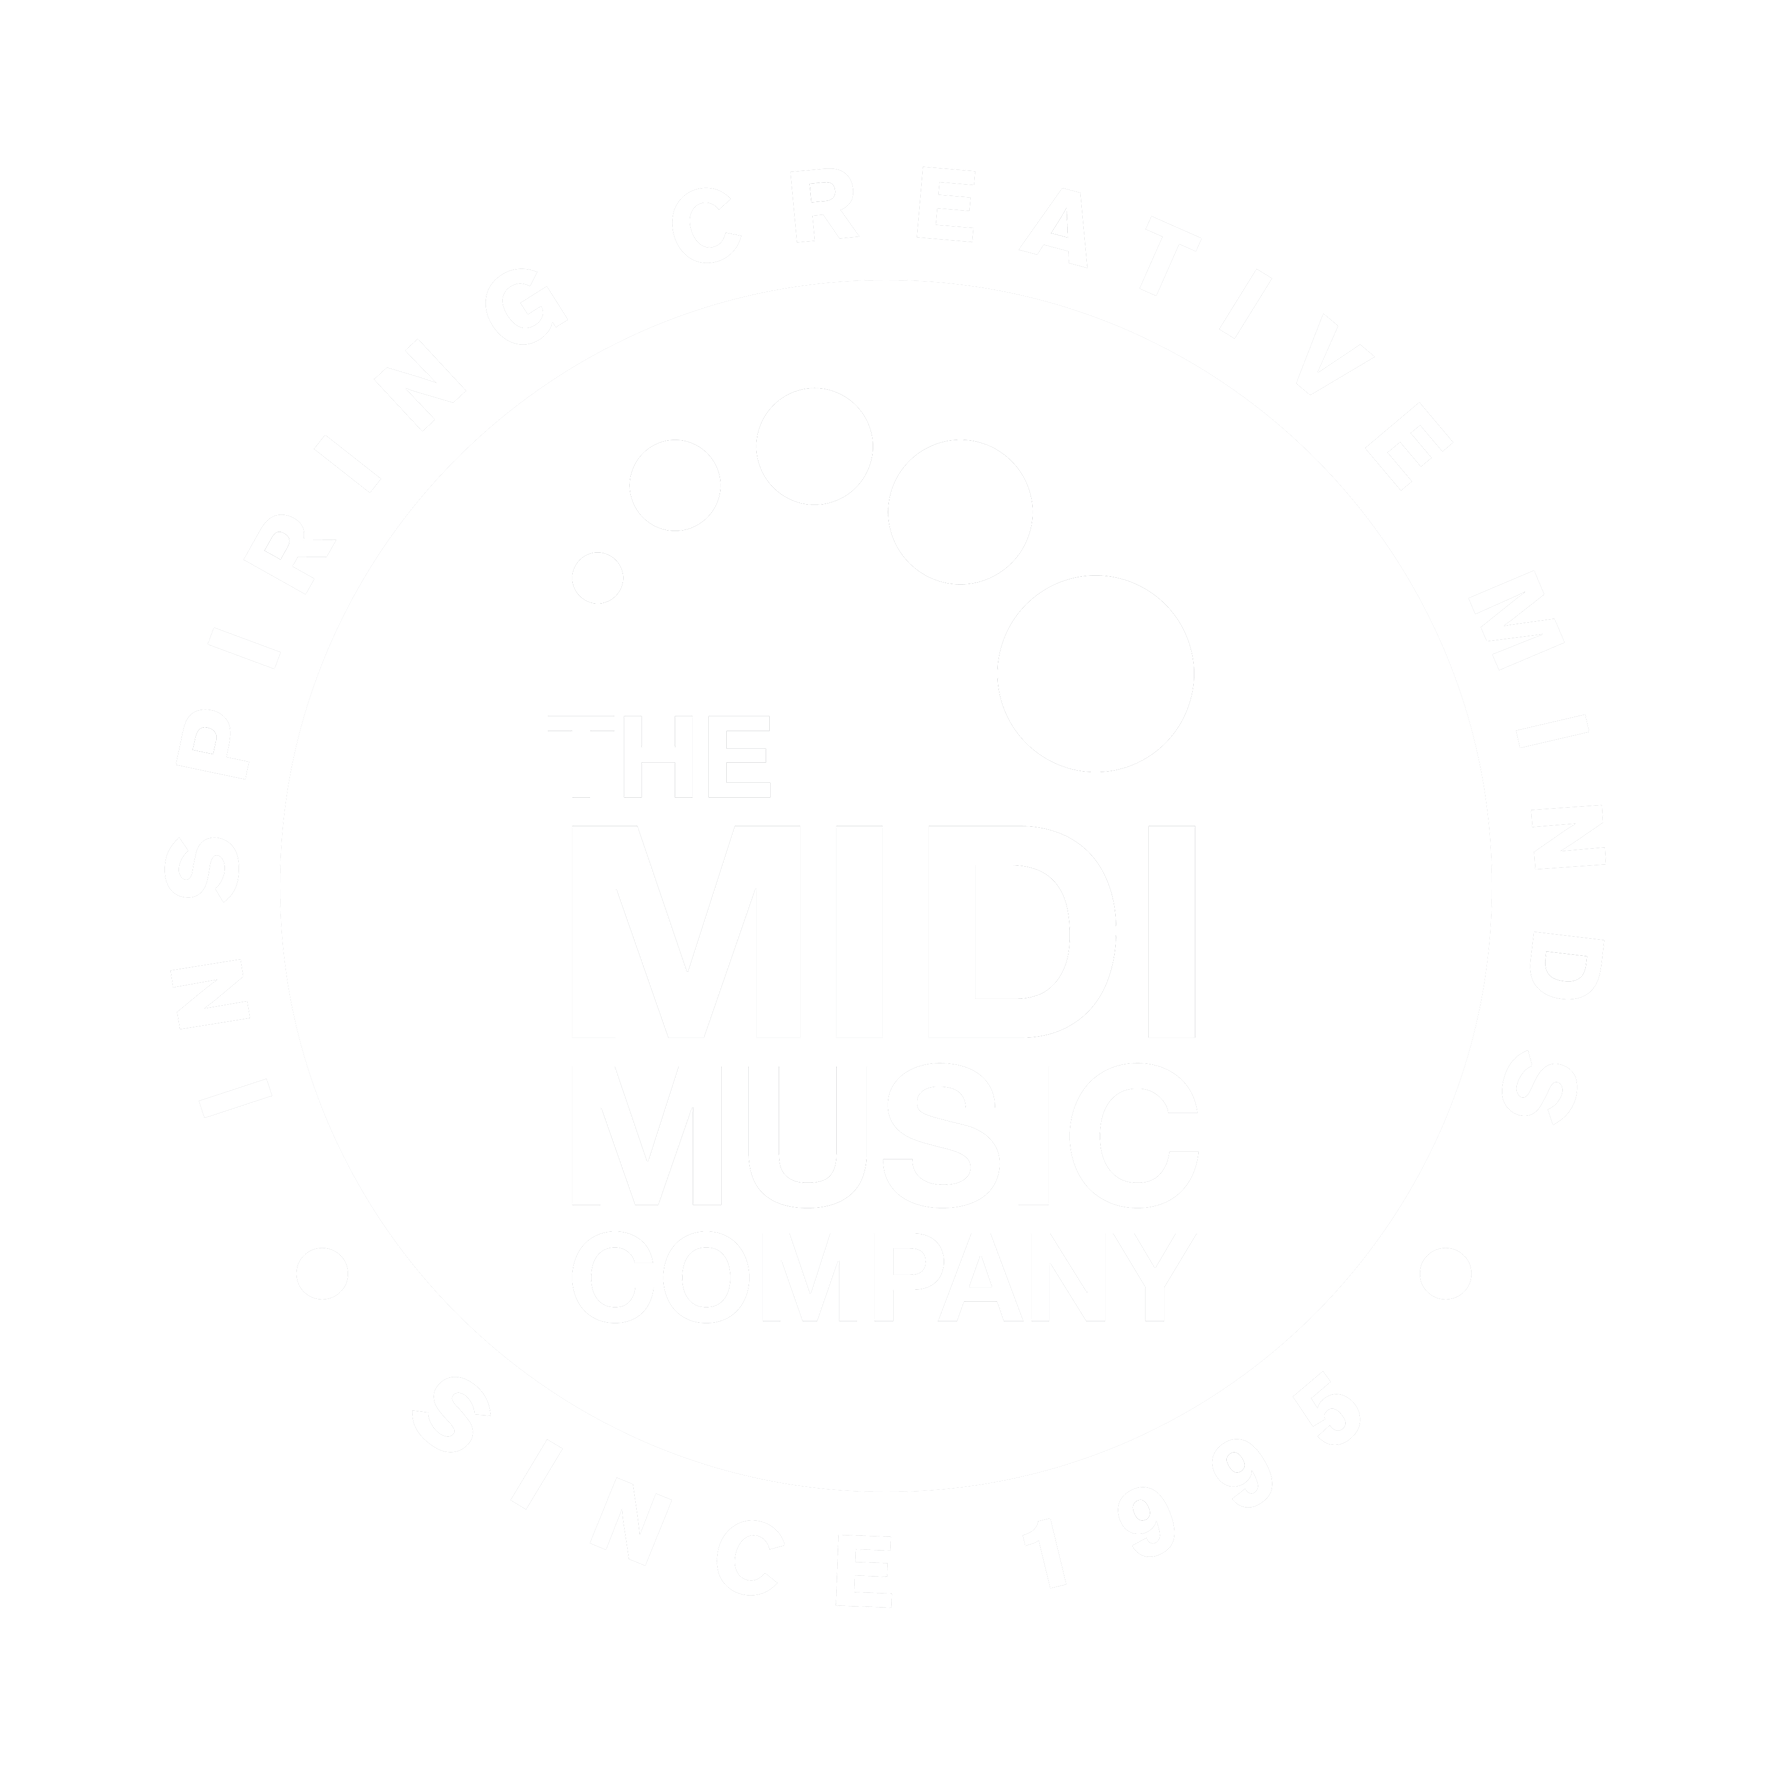 THE MIDI MUSIC COMPANY